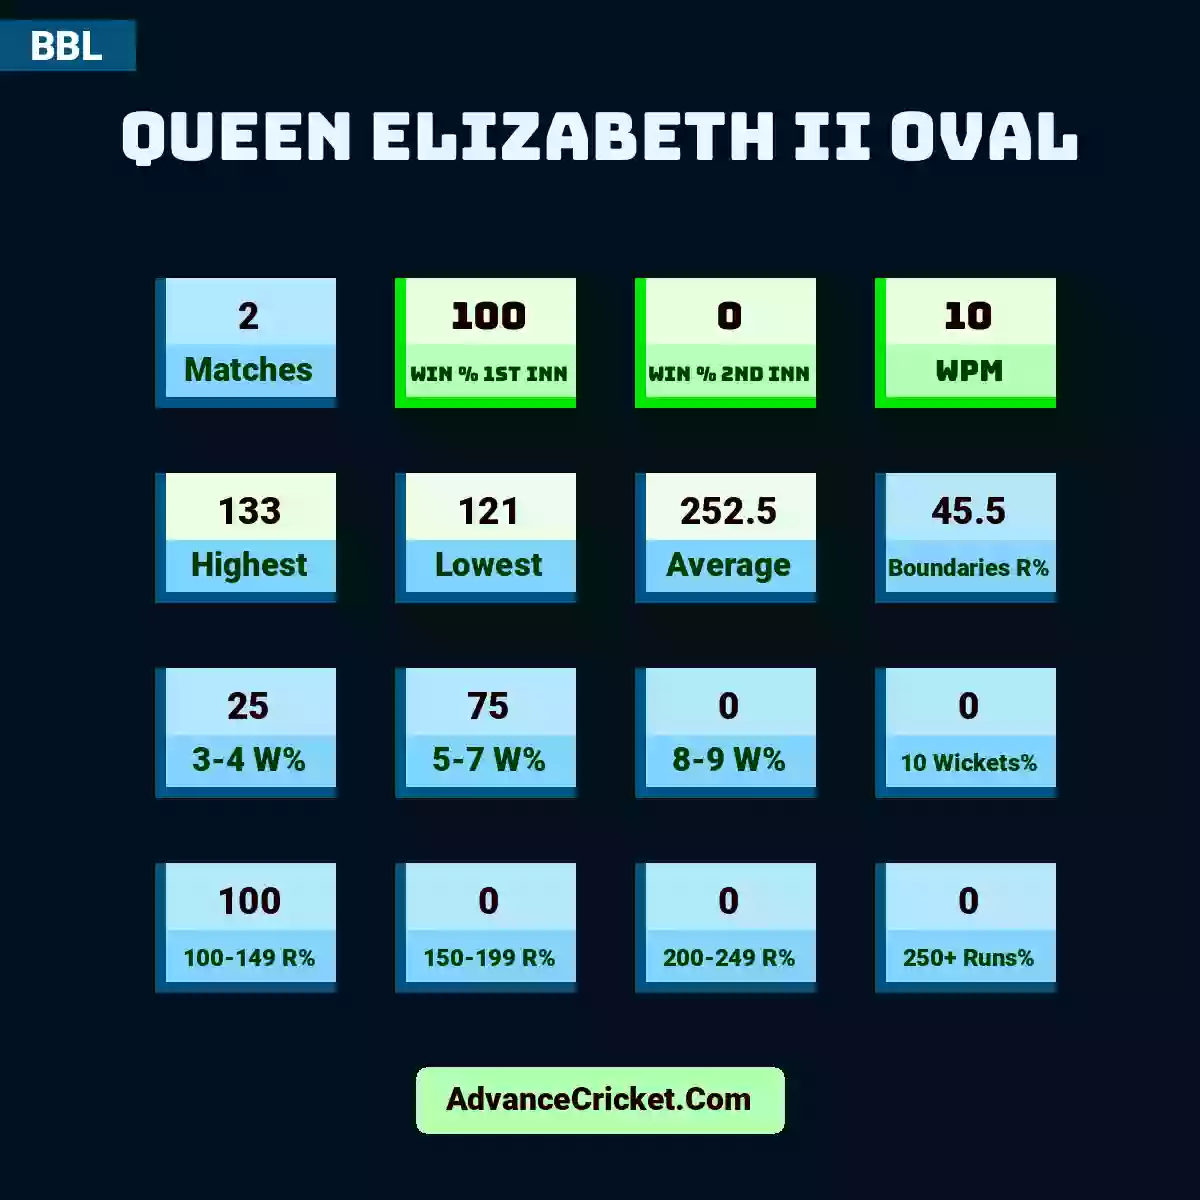 Image showing Queen Elizabeth II Oval with Matches: 2, Win % 1st Inn: 100, Win % 2nd Inn: 0, WPM: 10, Highest: 133, Lowest: 121, Average: 252.5, Boundaries R%: 45.5, 3-4 W%: 25, 5-7 W%: 75, 8-9 W%: 0, 10 Wickets%: 0, 100-149 R%: 100, 150-199 R%: 0, 200-249 R%: 0, 250+ Runs%: 0.